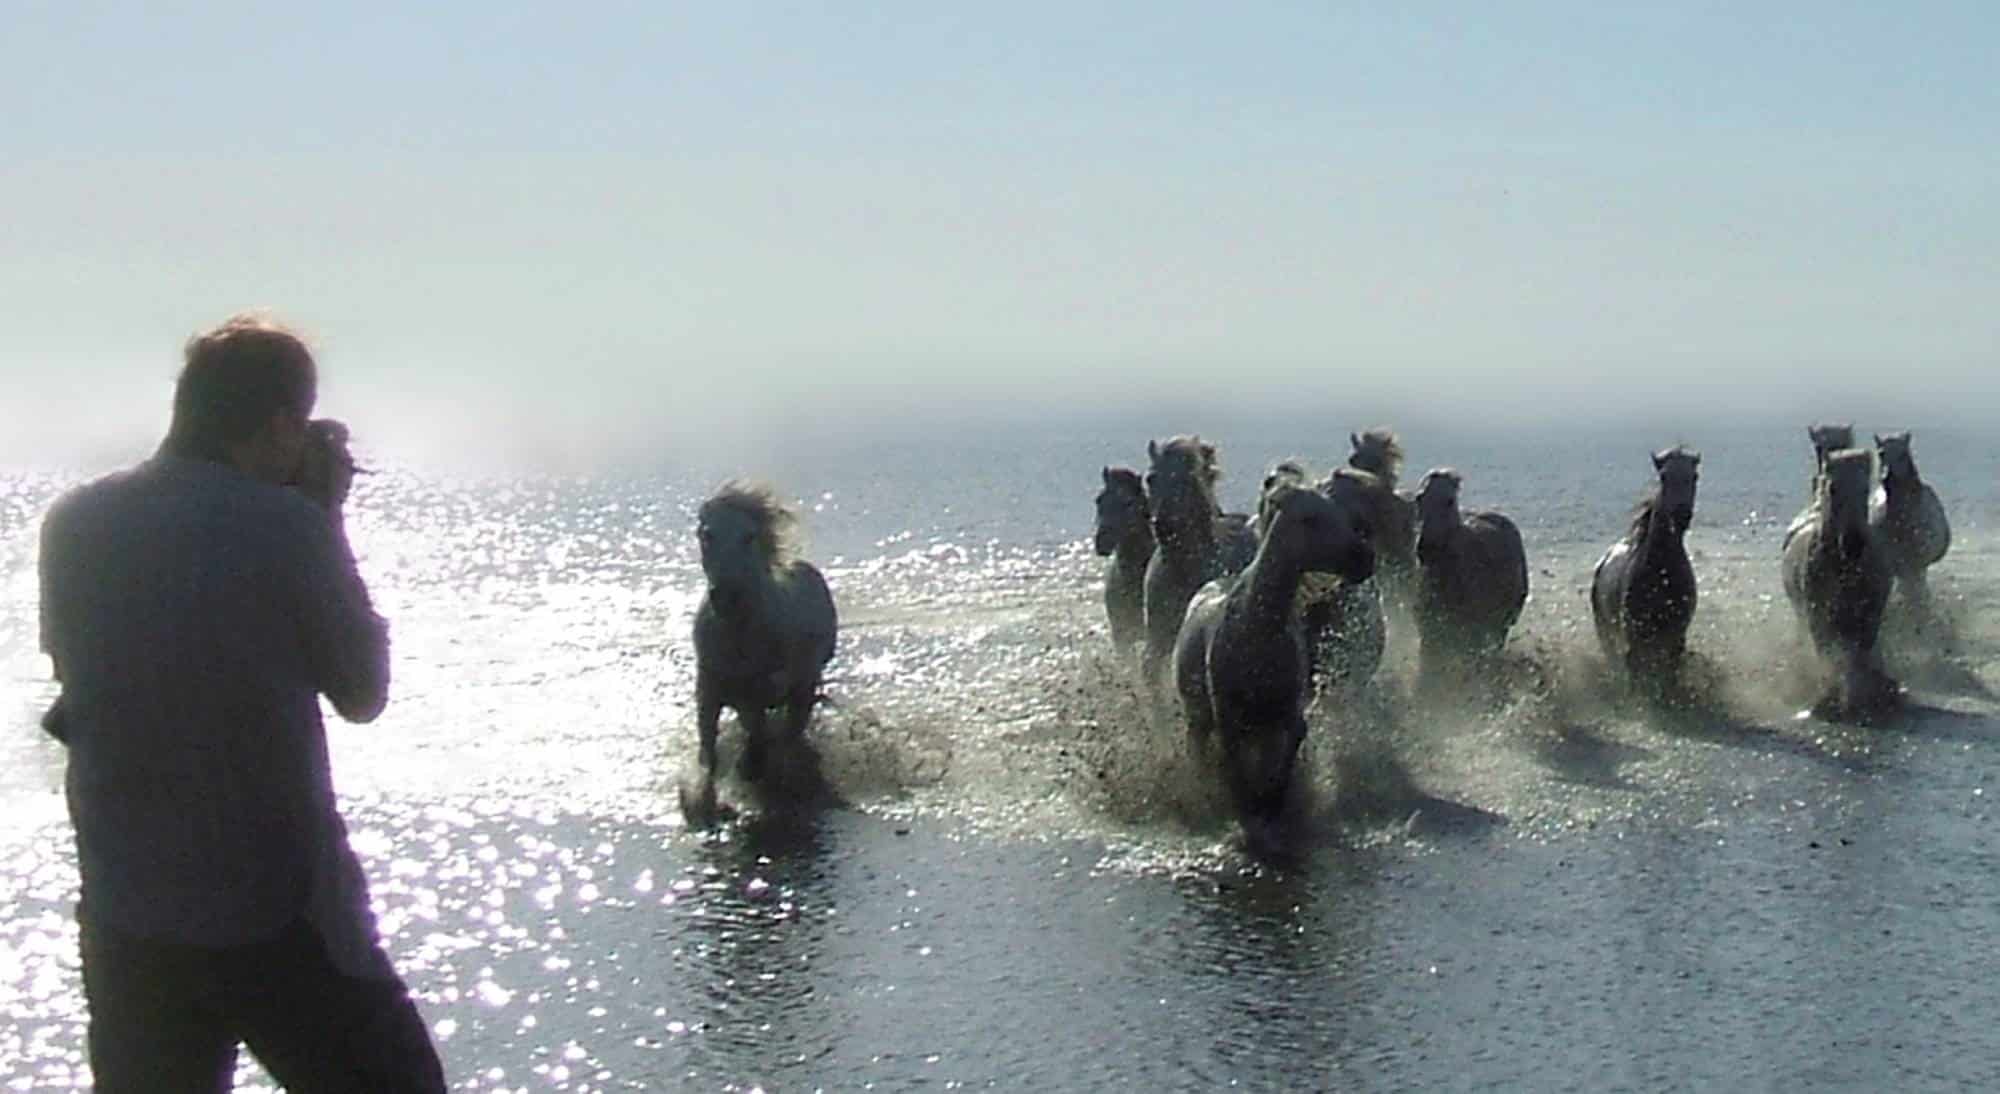 diaforetiko.gr : spl474516 005 Λευκά άλογα φωτογραφίζονται να τρέχουν στη θάλασσα! Η αίσθηση της ελευθερίας στο αποκορύφωμά της…